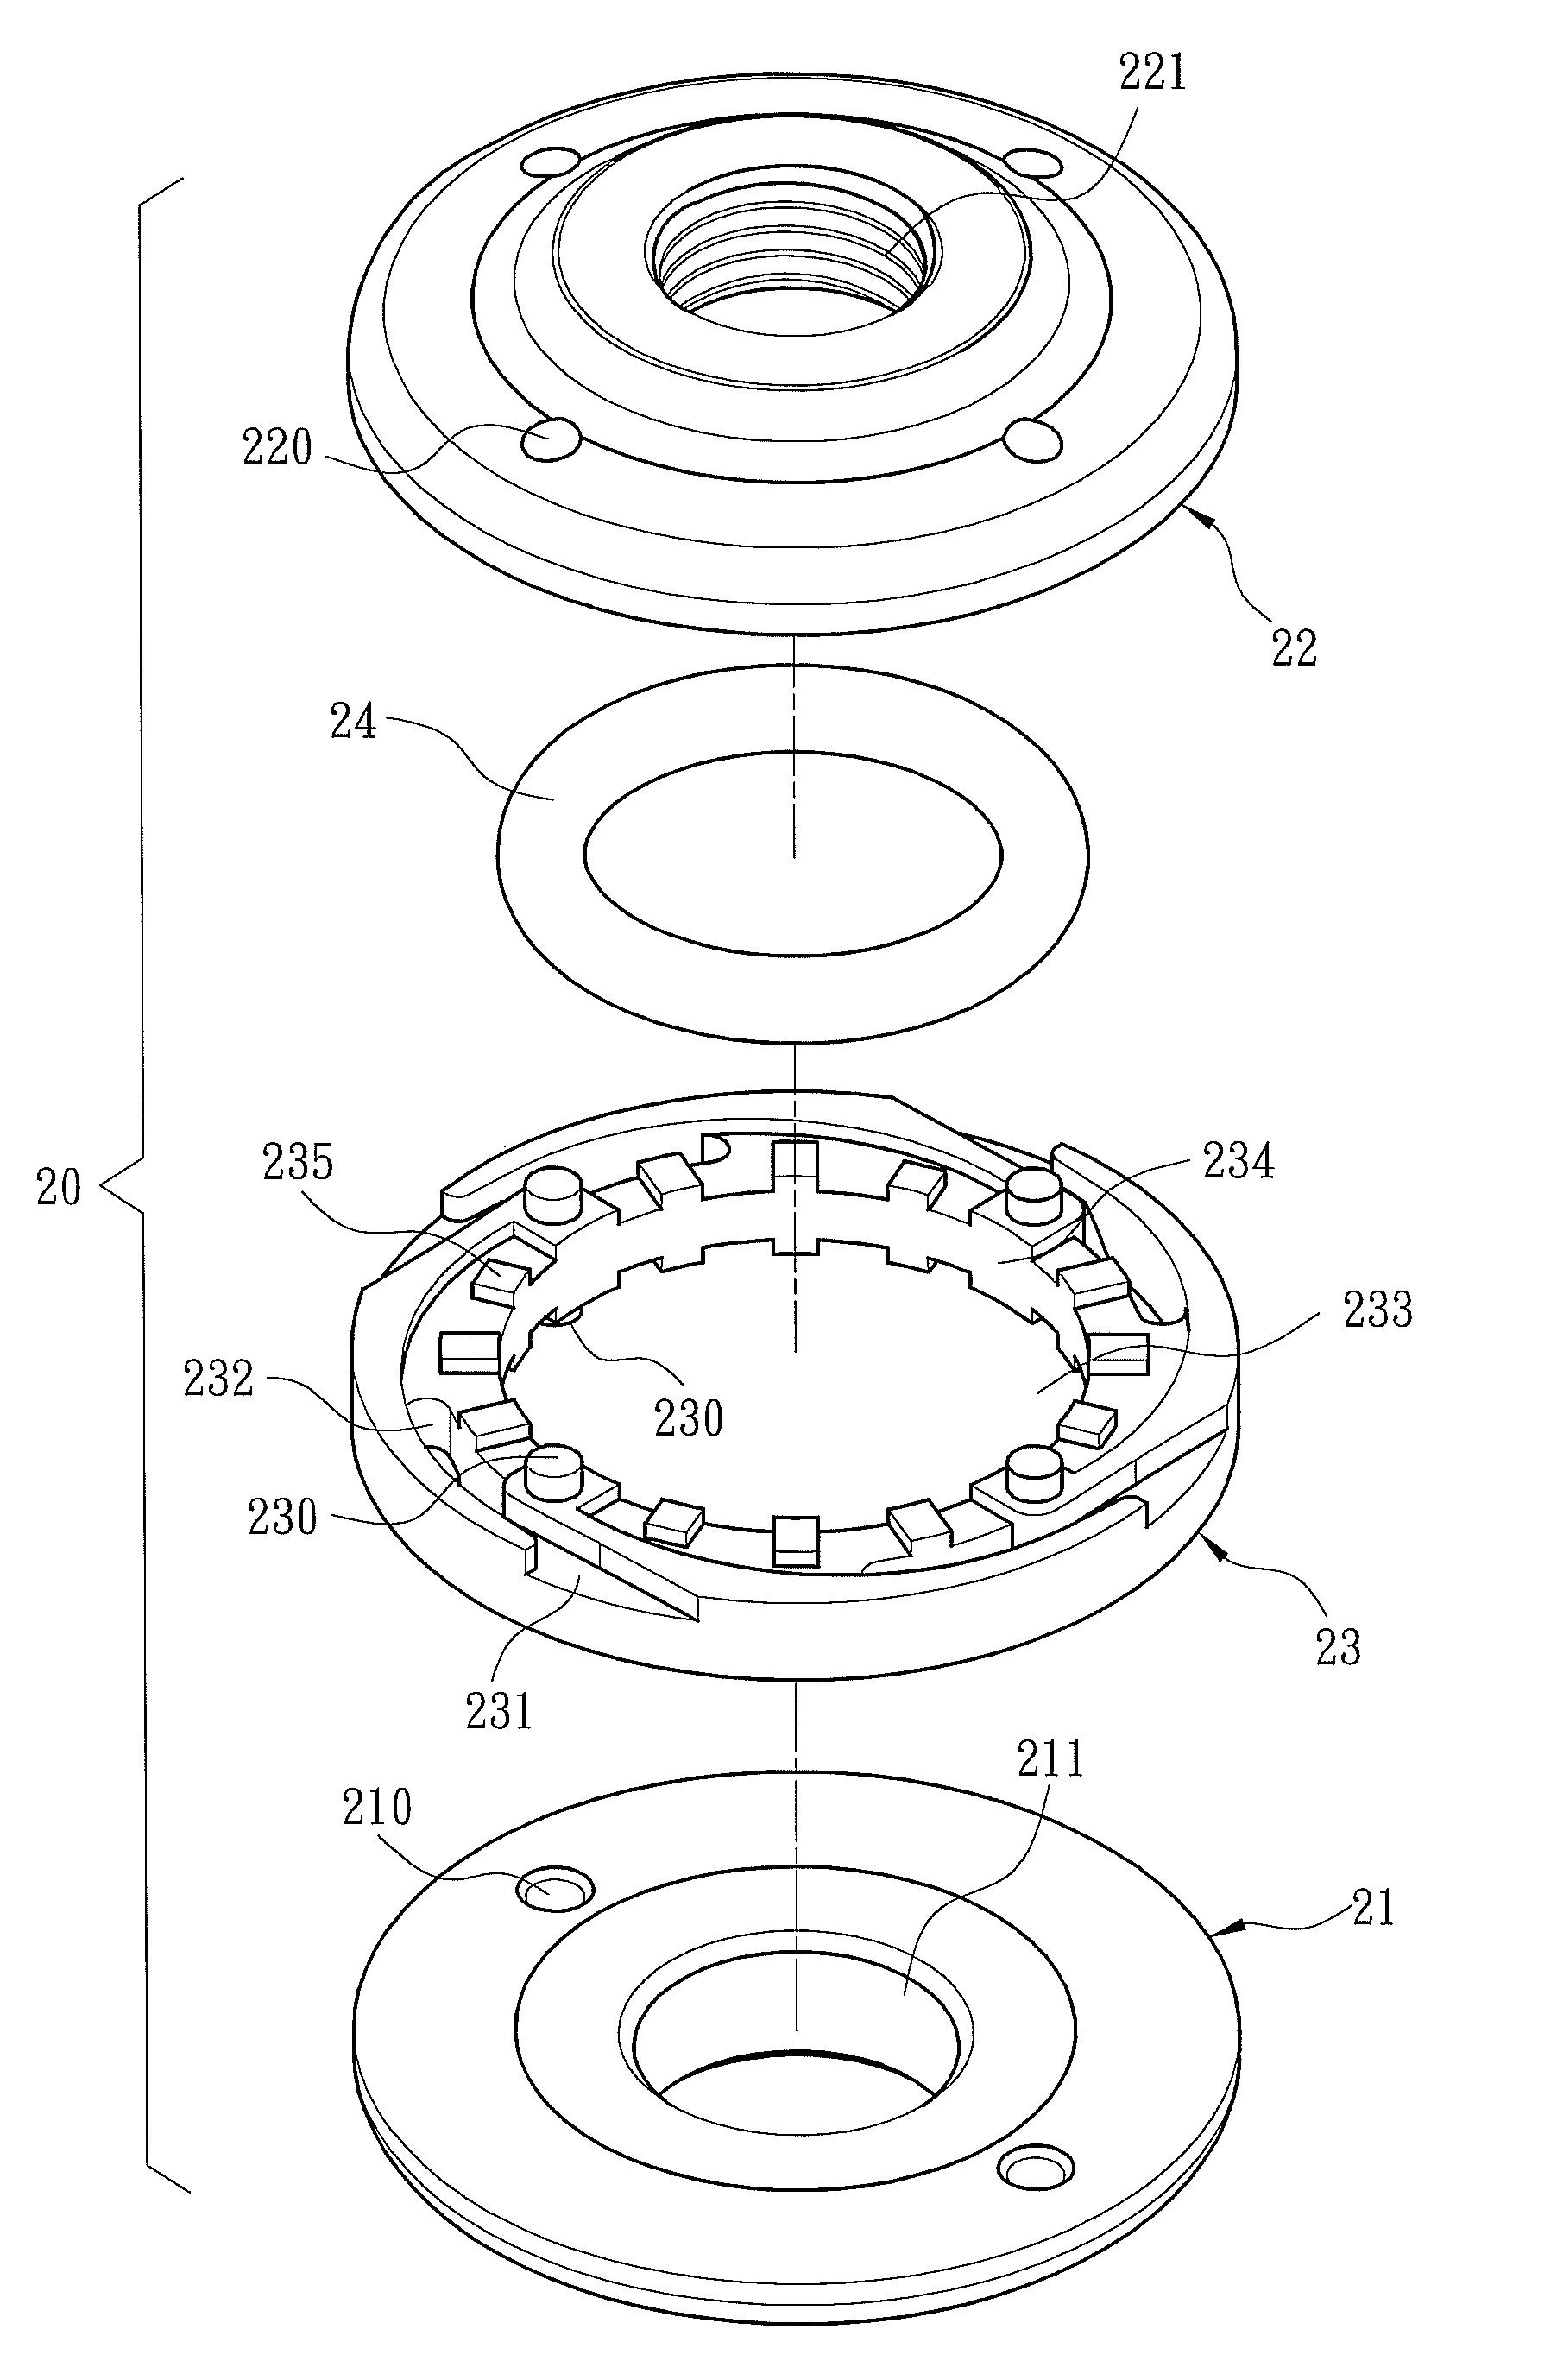 Pneumatic turbine motor air chamber